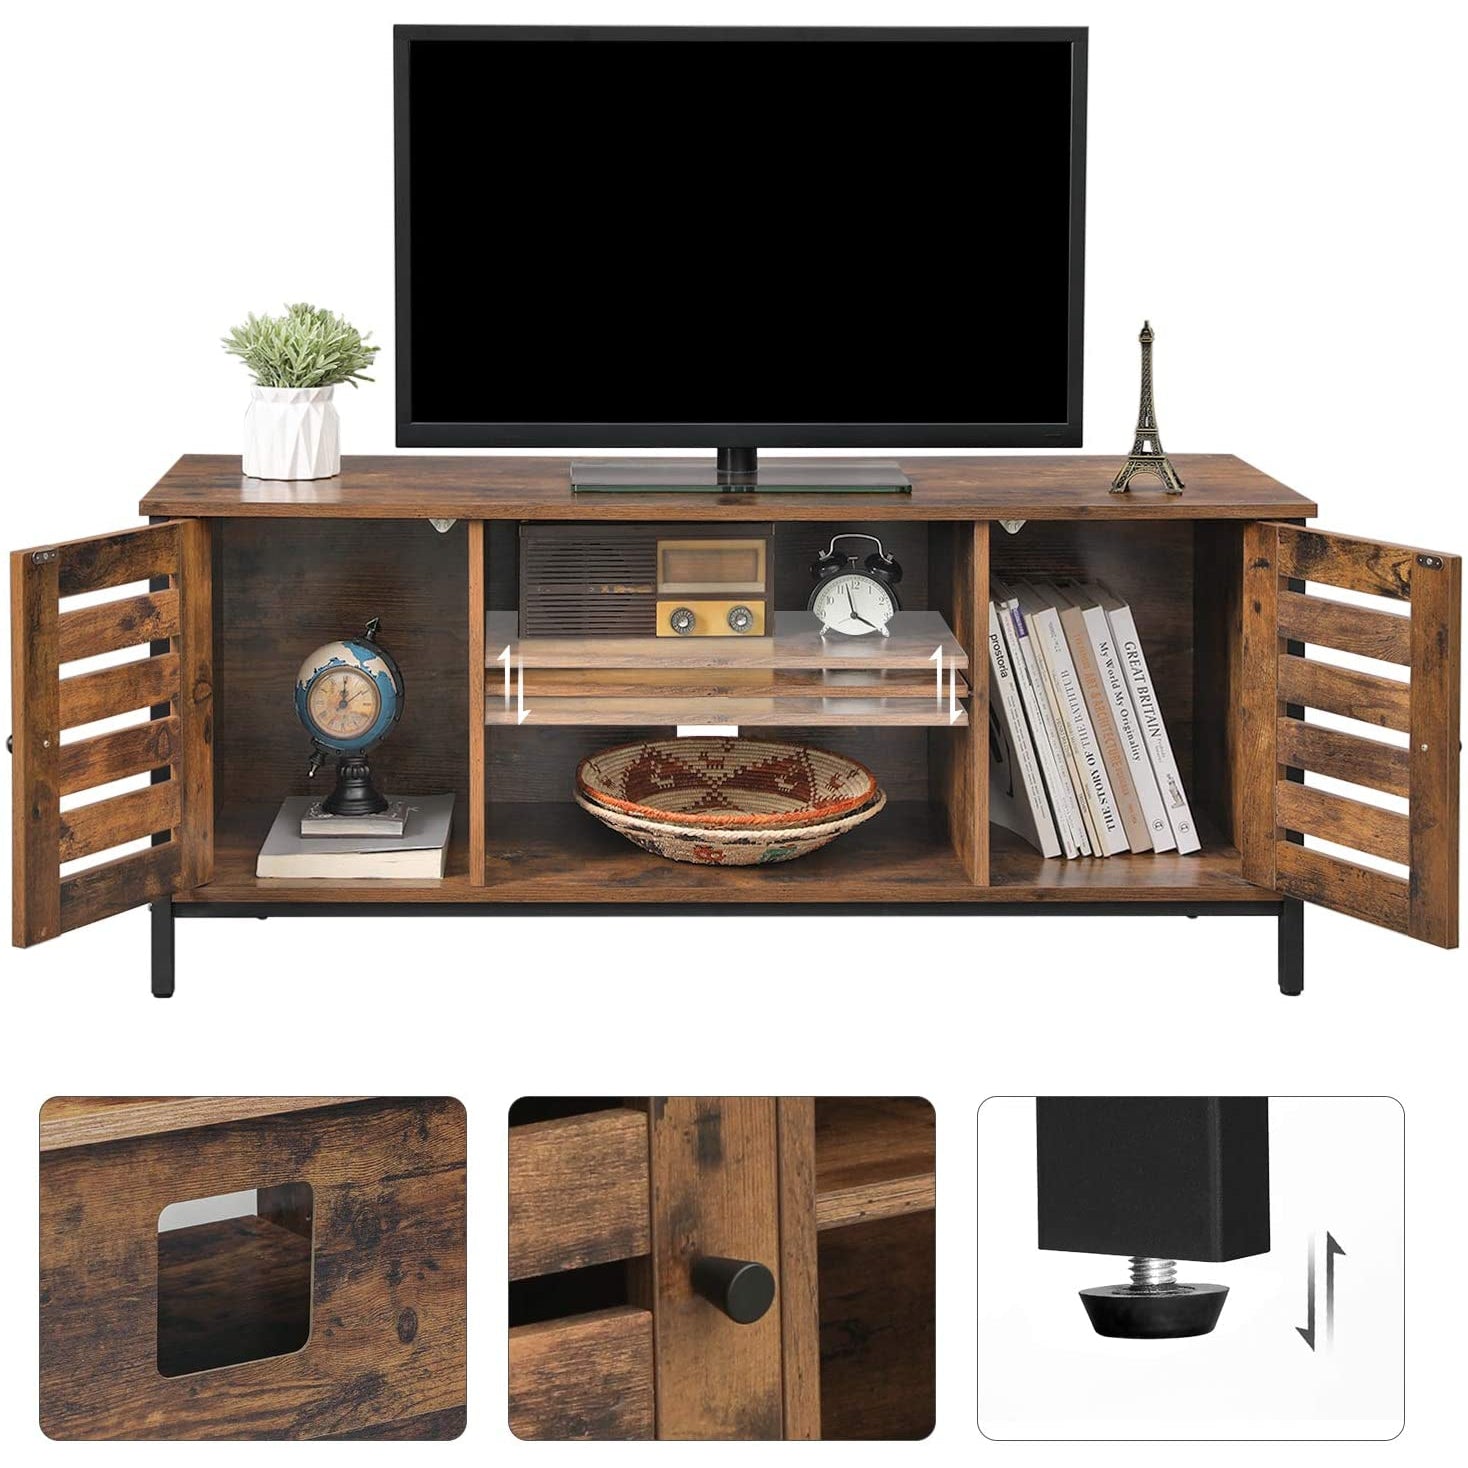 Nancy's Jefferson TV Furniture - TV Cabinet - TV Lowboard - TV Table - TV Furniture - Vintage - Brown - Metal - 110 x 40 x 50